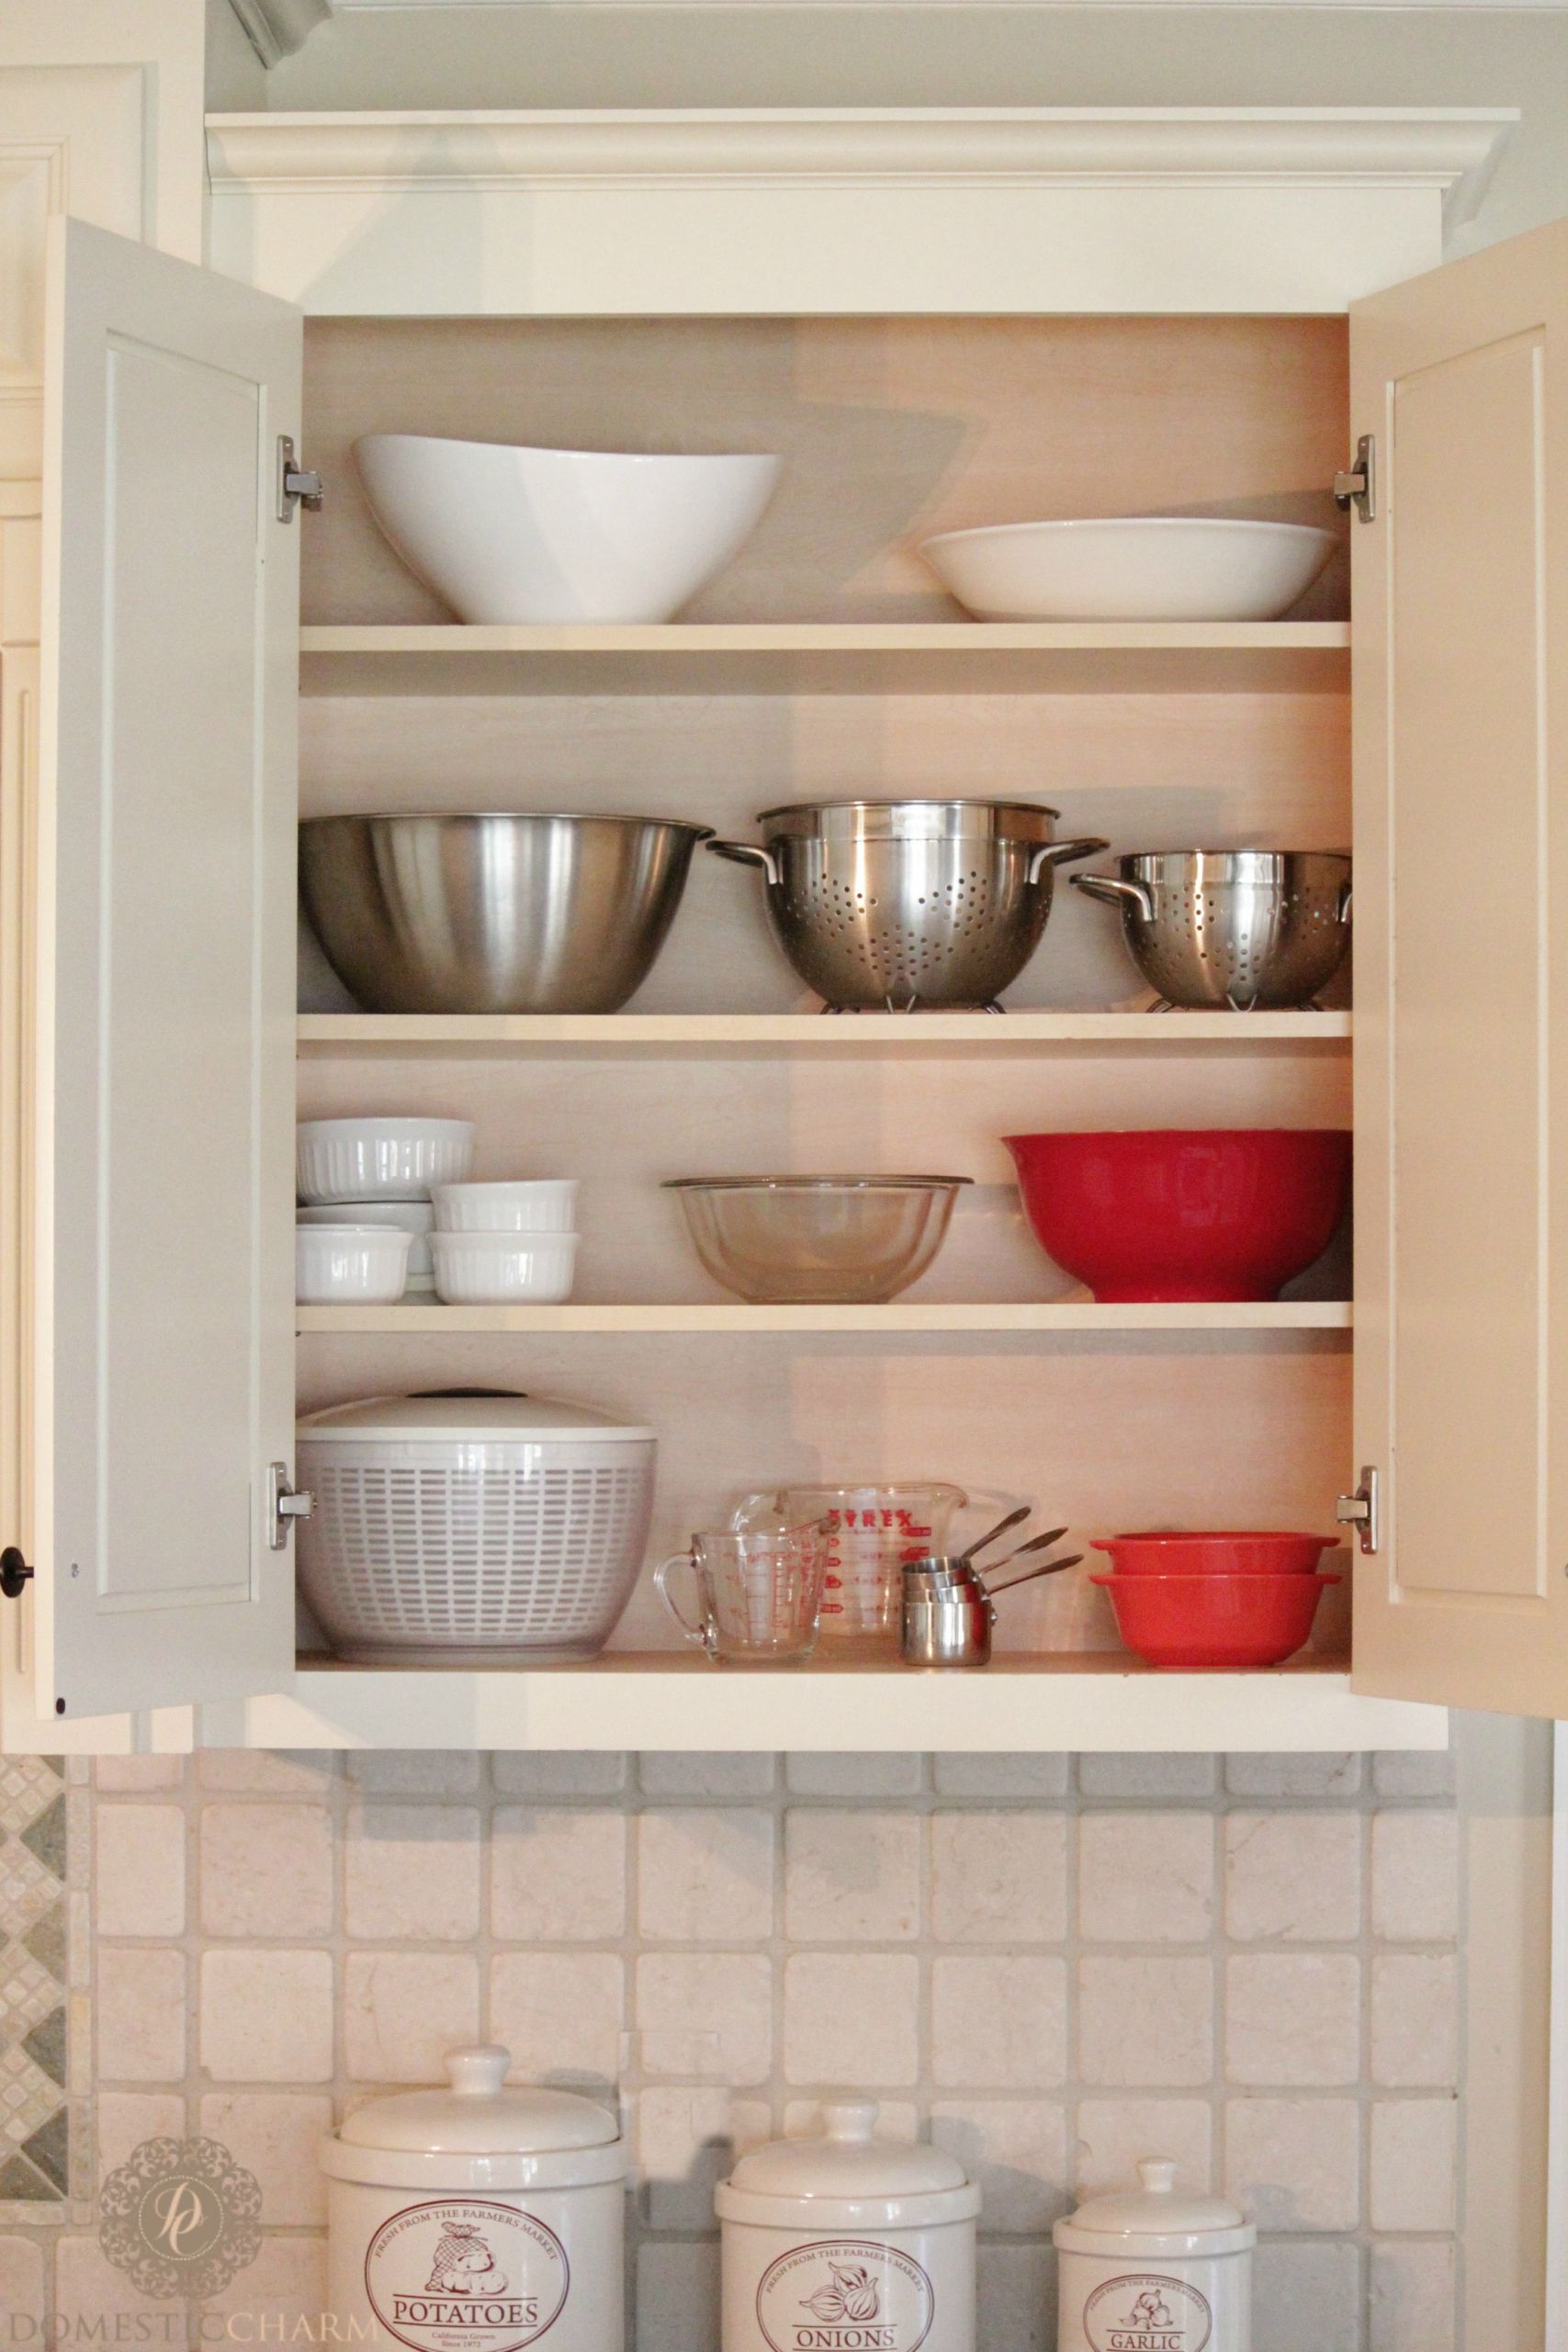 Kitchen Cabinets Organizer
 Organizing Your Kitchen Cabinets Domestic Charm